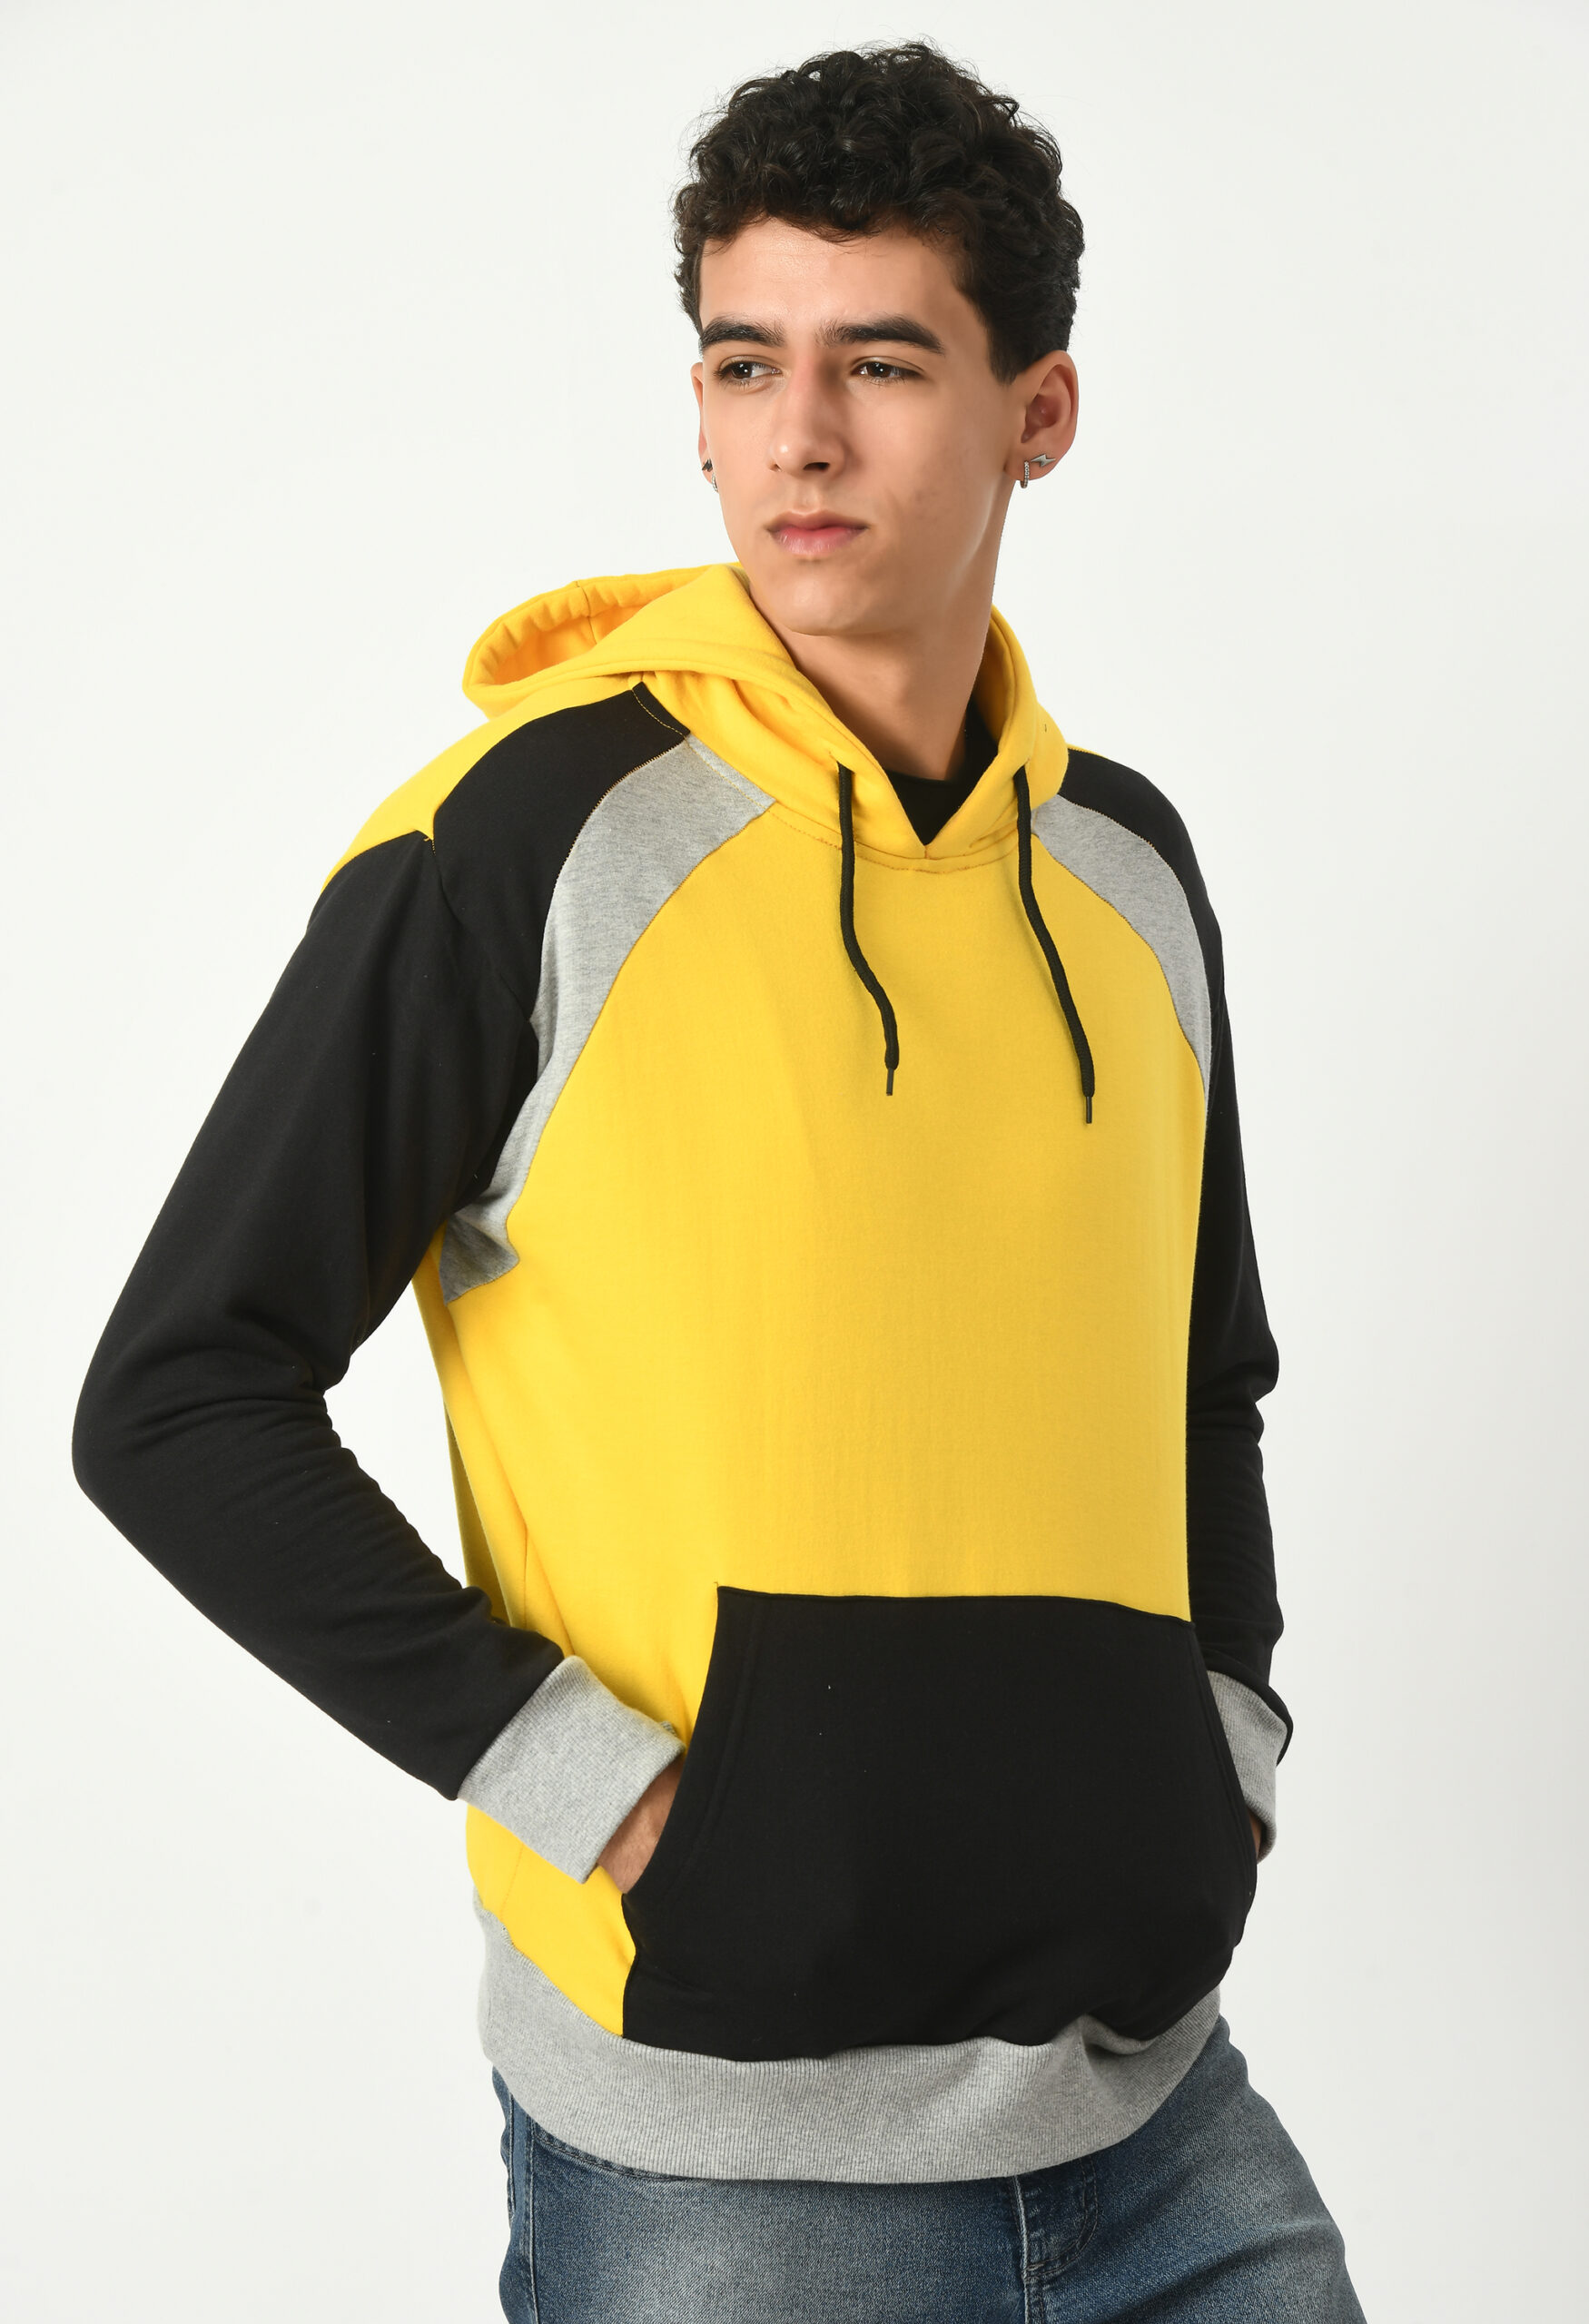 Multi Coloured Hoodies for Men - Yellow & Black 4